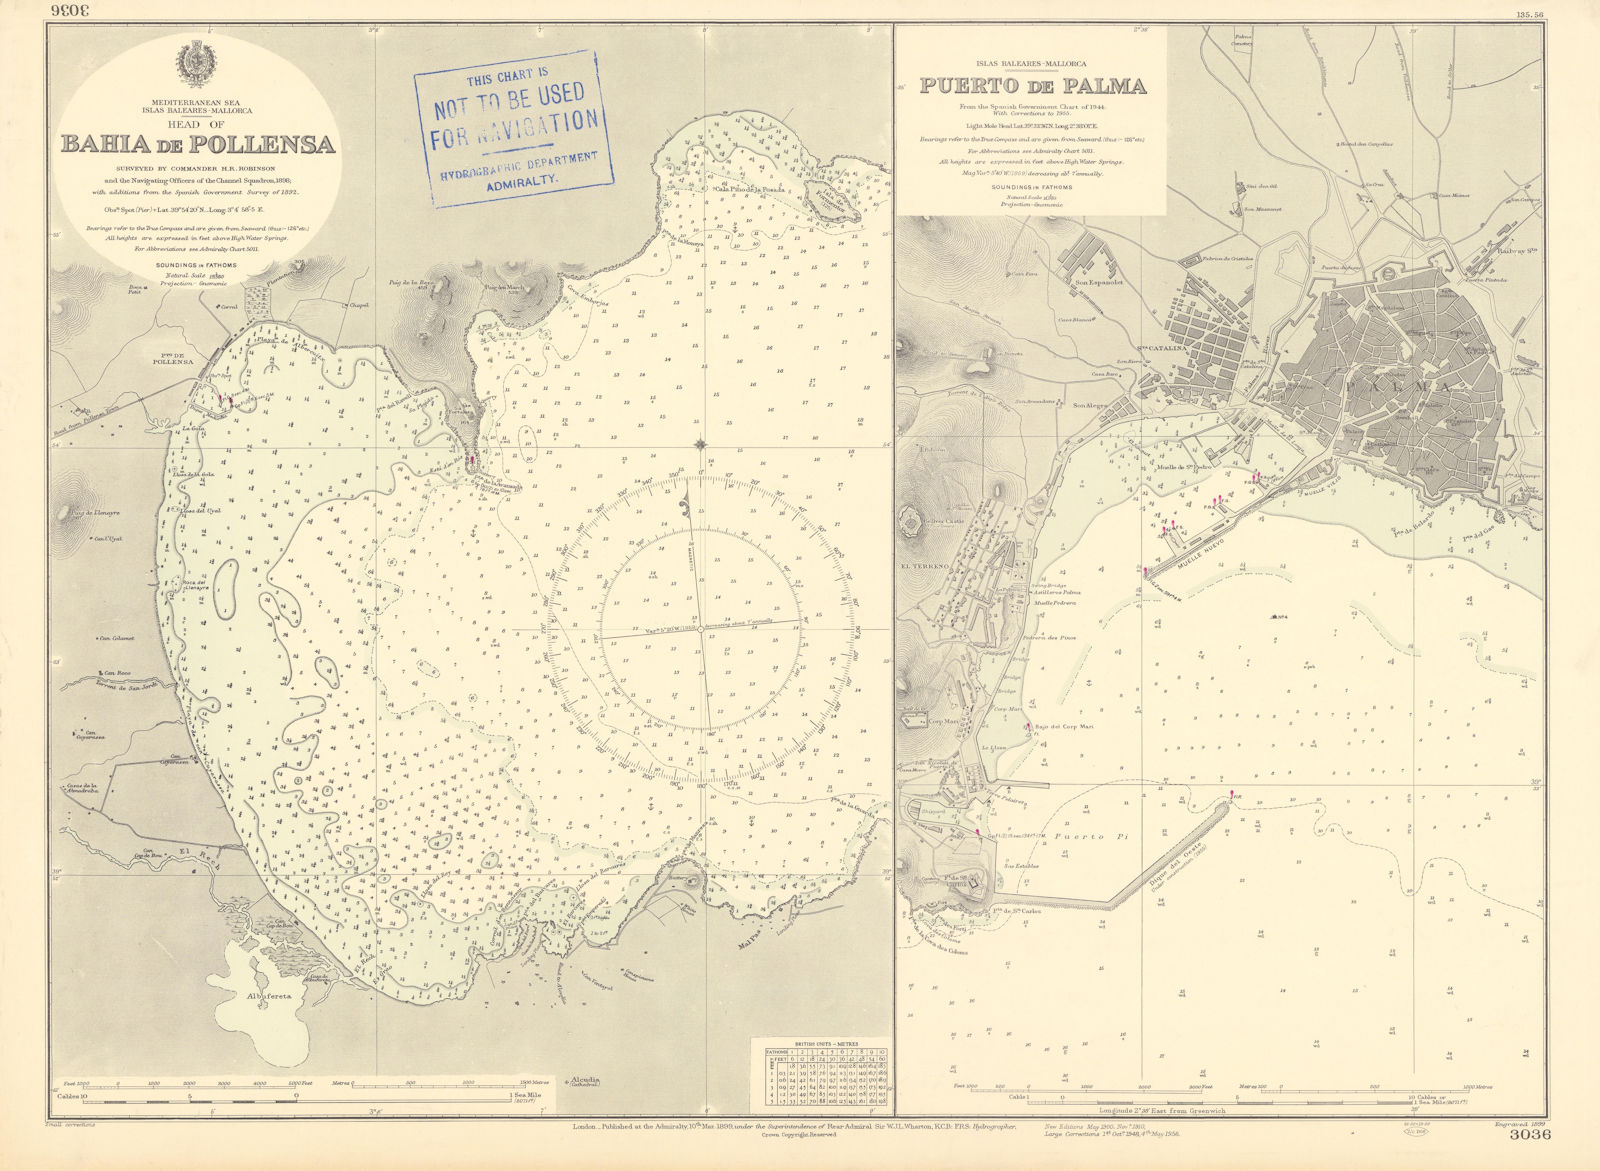 Mallorca Majorca ports Badia Pollença Palma ADMIRALTY sea chart 1899 (1956) map